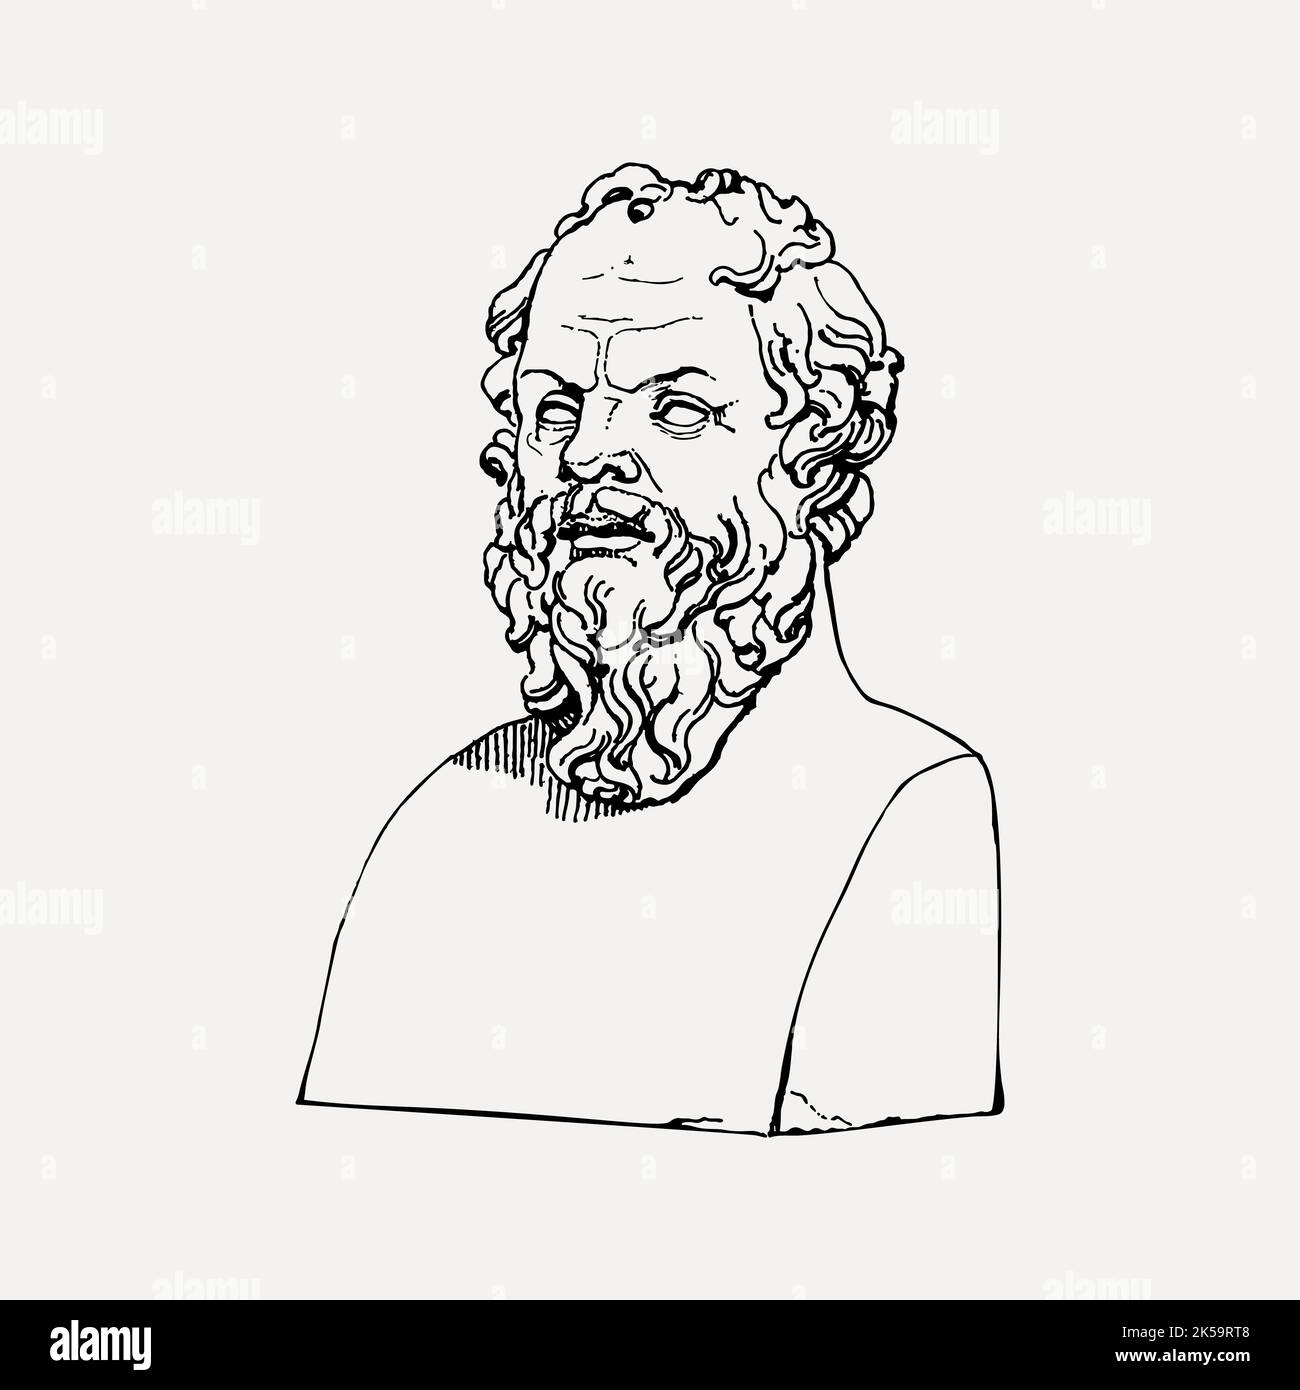 ArtStation - head of Socrates, study, pencil